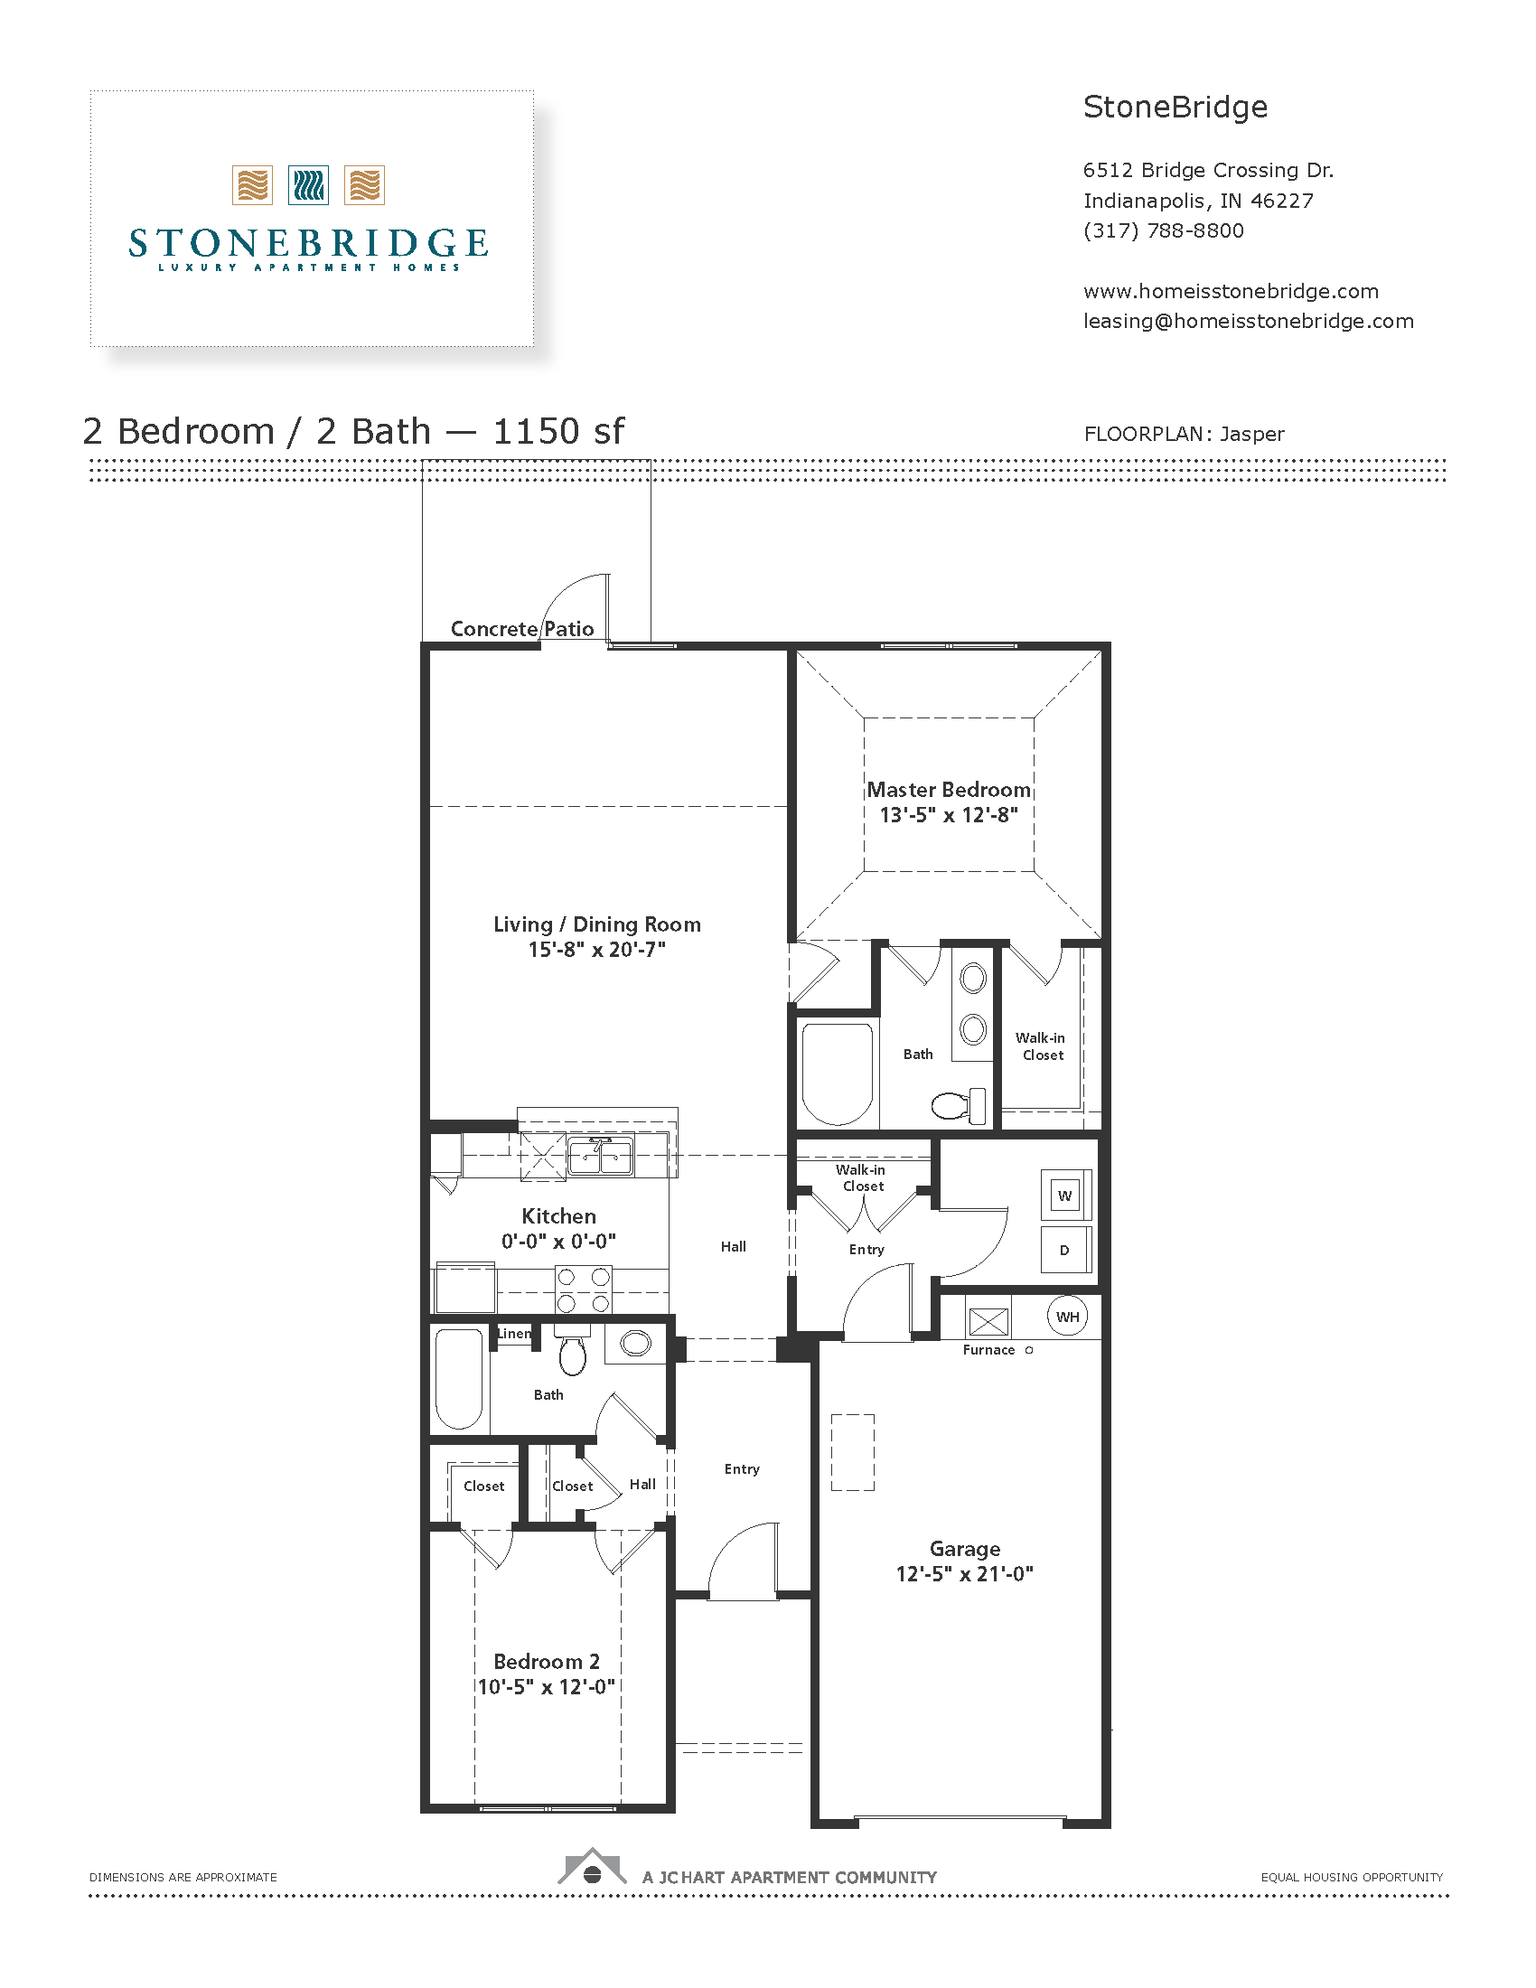 Jasper floor plan - StoneBridge Apartment Homes _ Indianapolis apartments_preview.png